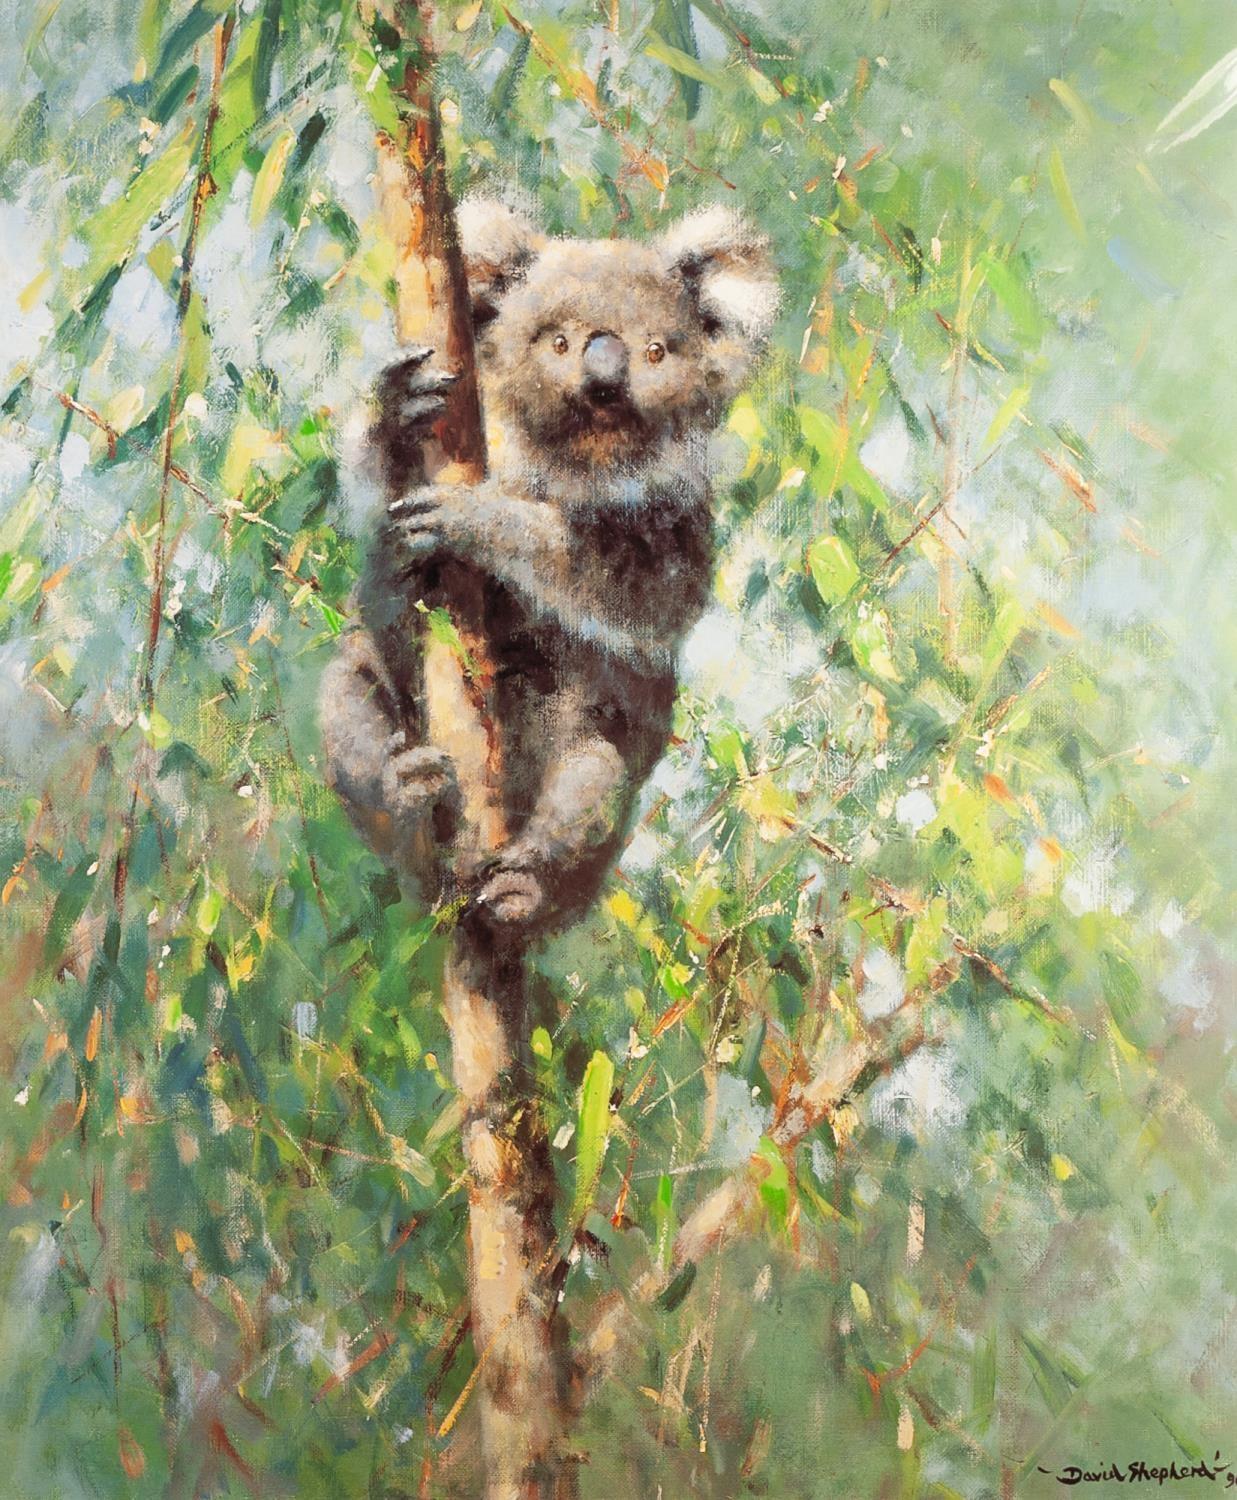 DAVID SHEPHERD ARTIST SIGNED LIMITED EDITION COLOUR PRINT 'Koala' Numbered 795/975 19" x 15 3/4" (48